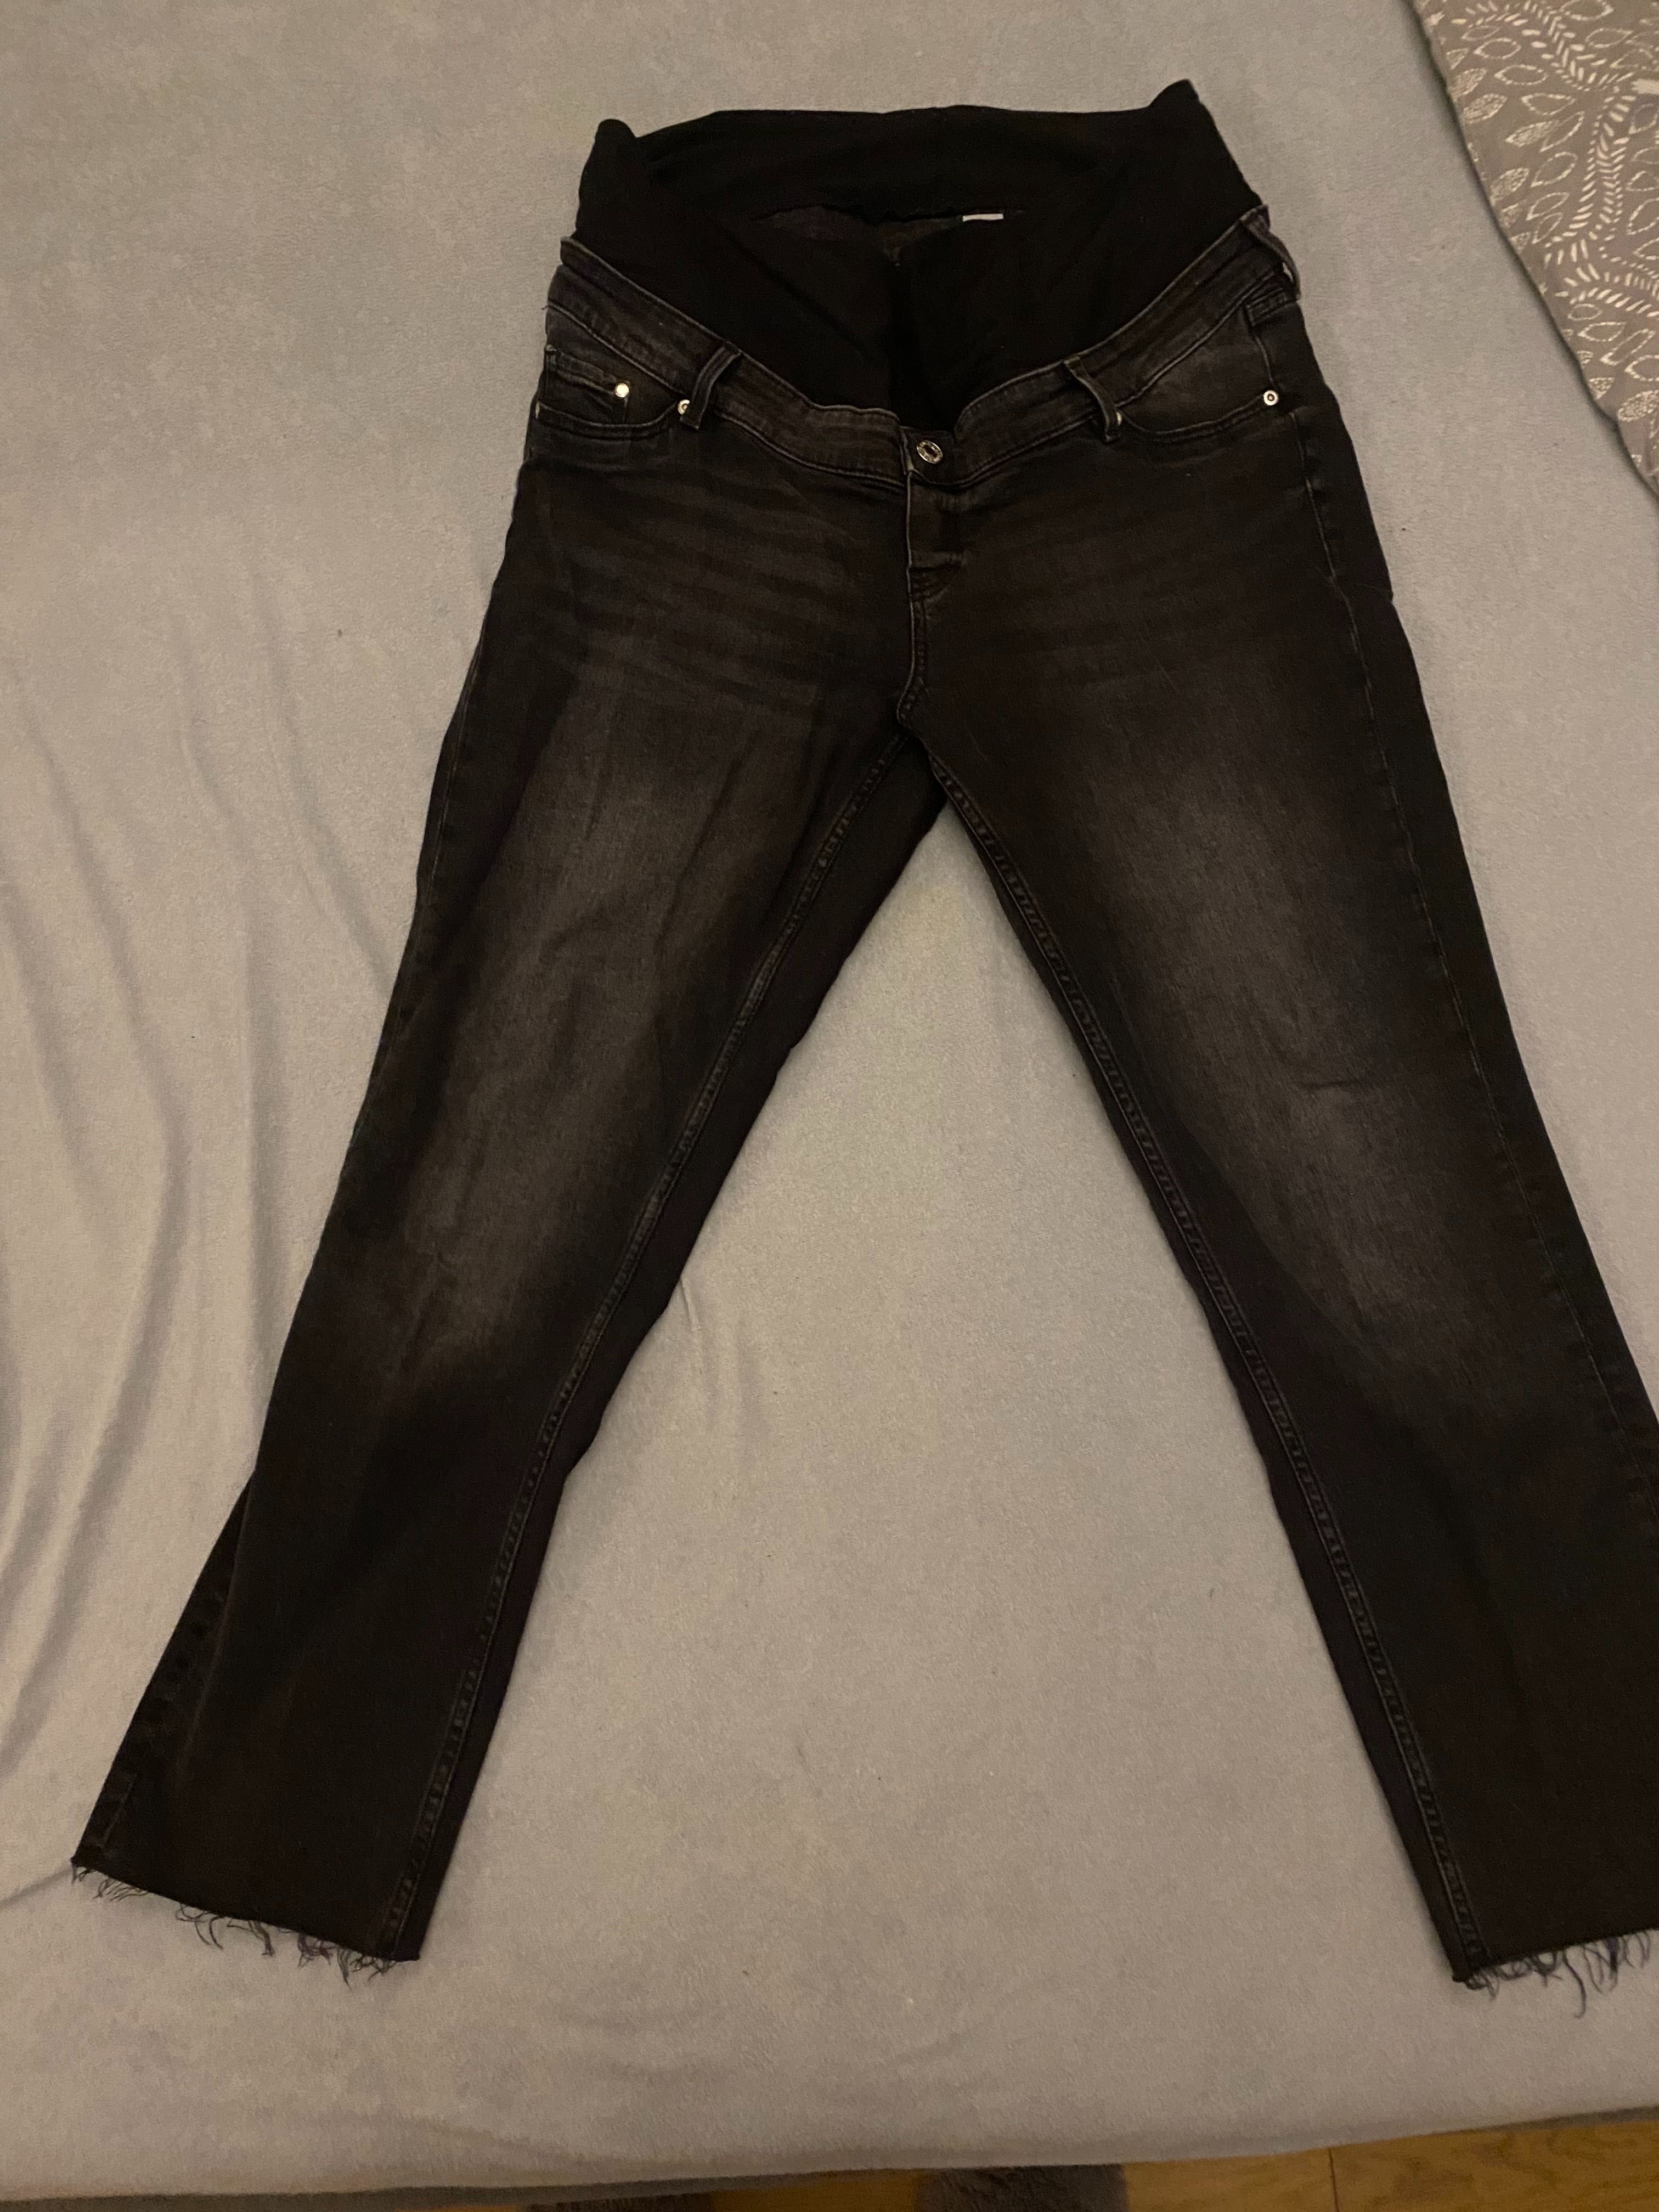 Spodnie ciążowe mom mam mum jeans hm h&m rozmiar L 40/42